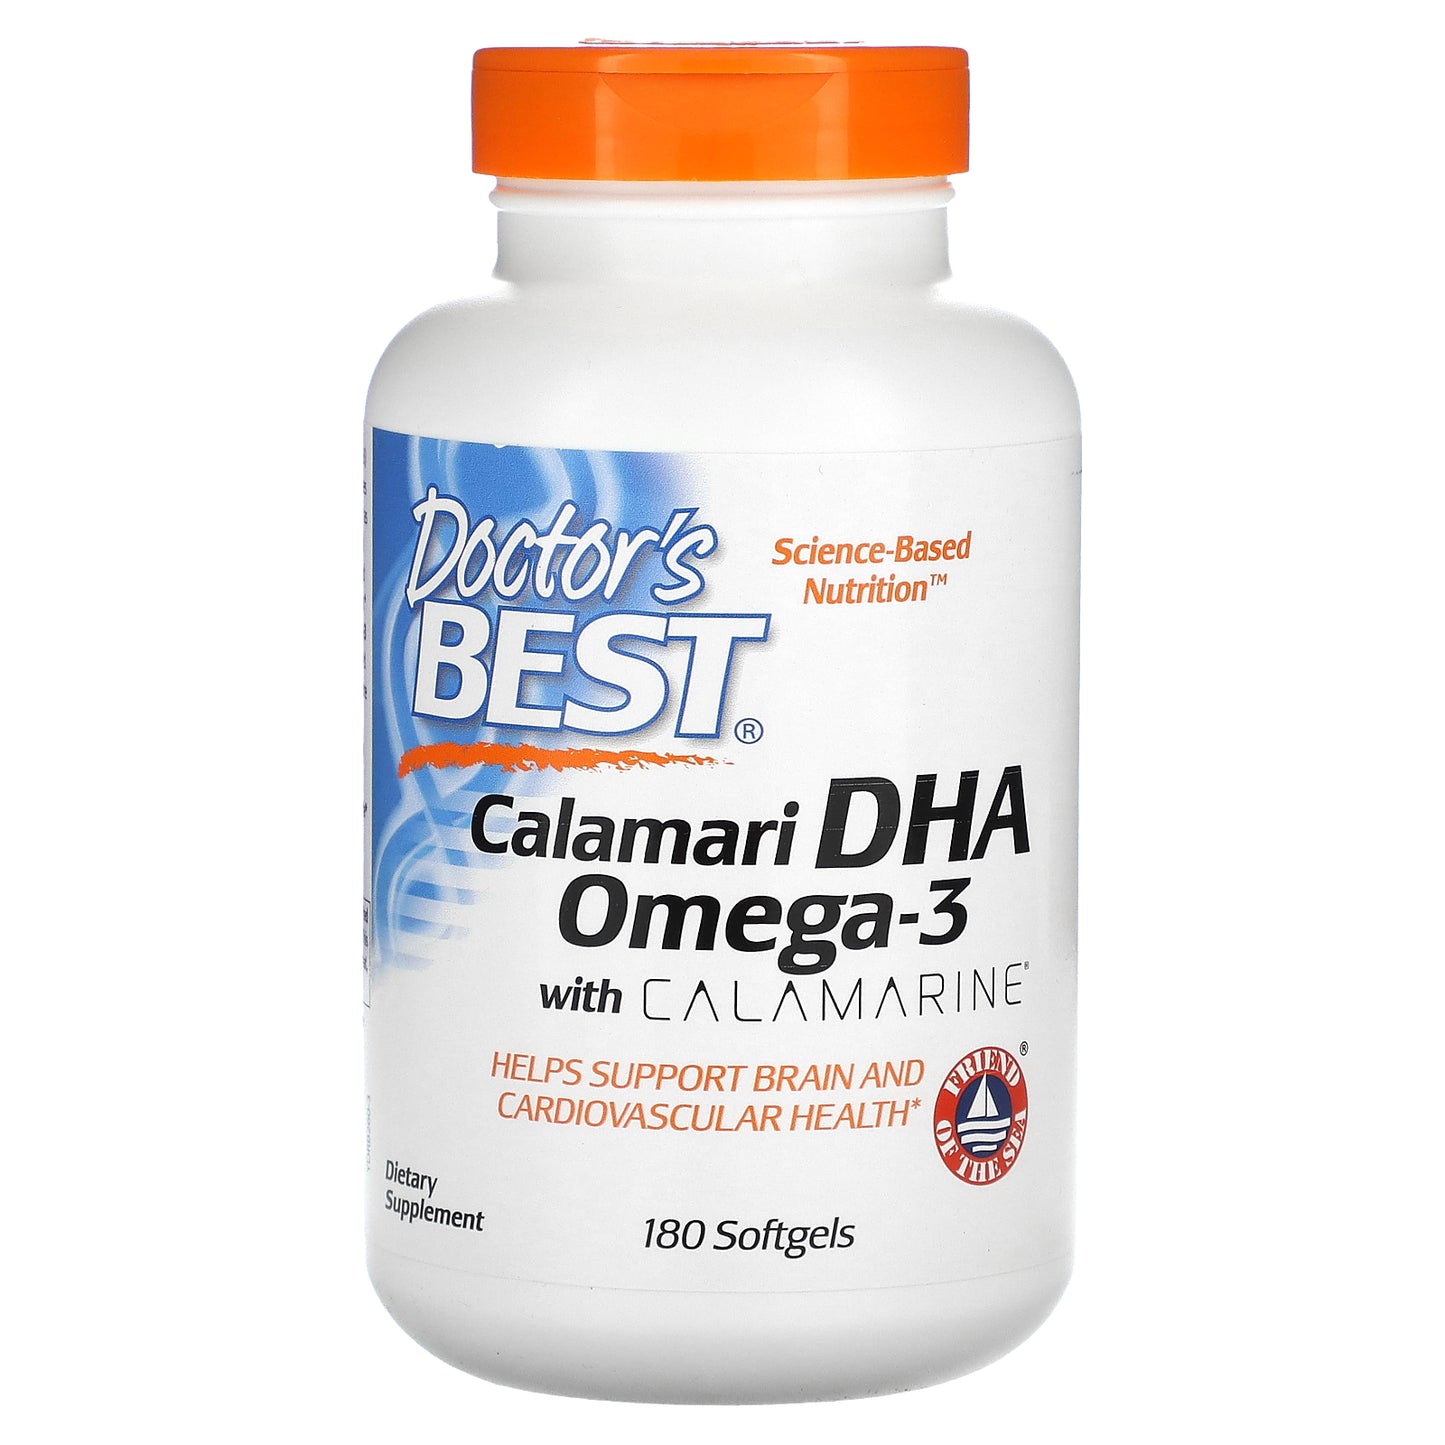 Doctor's Best Calamari DHA Omega-3 with Calamarine, 180 Softgels